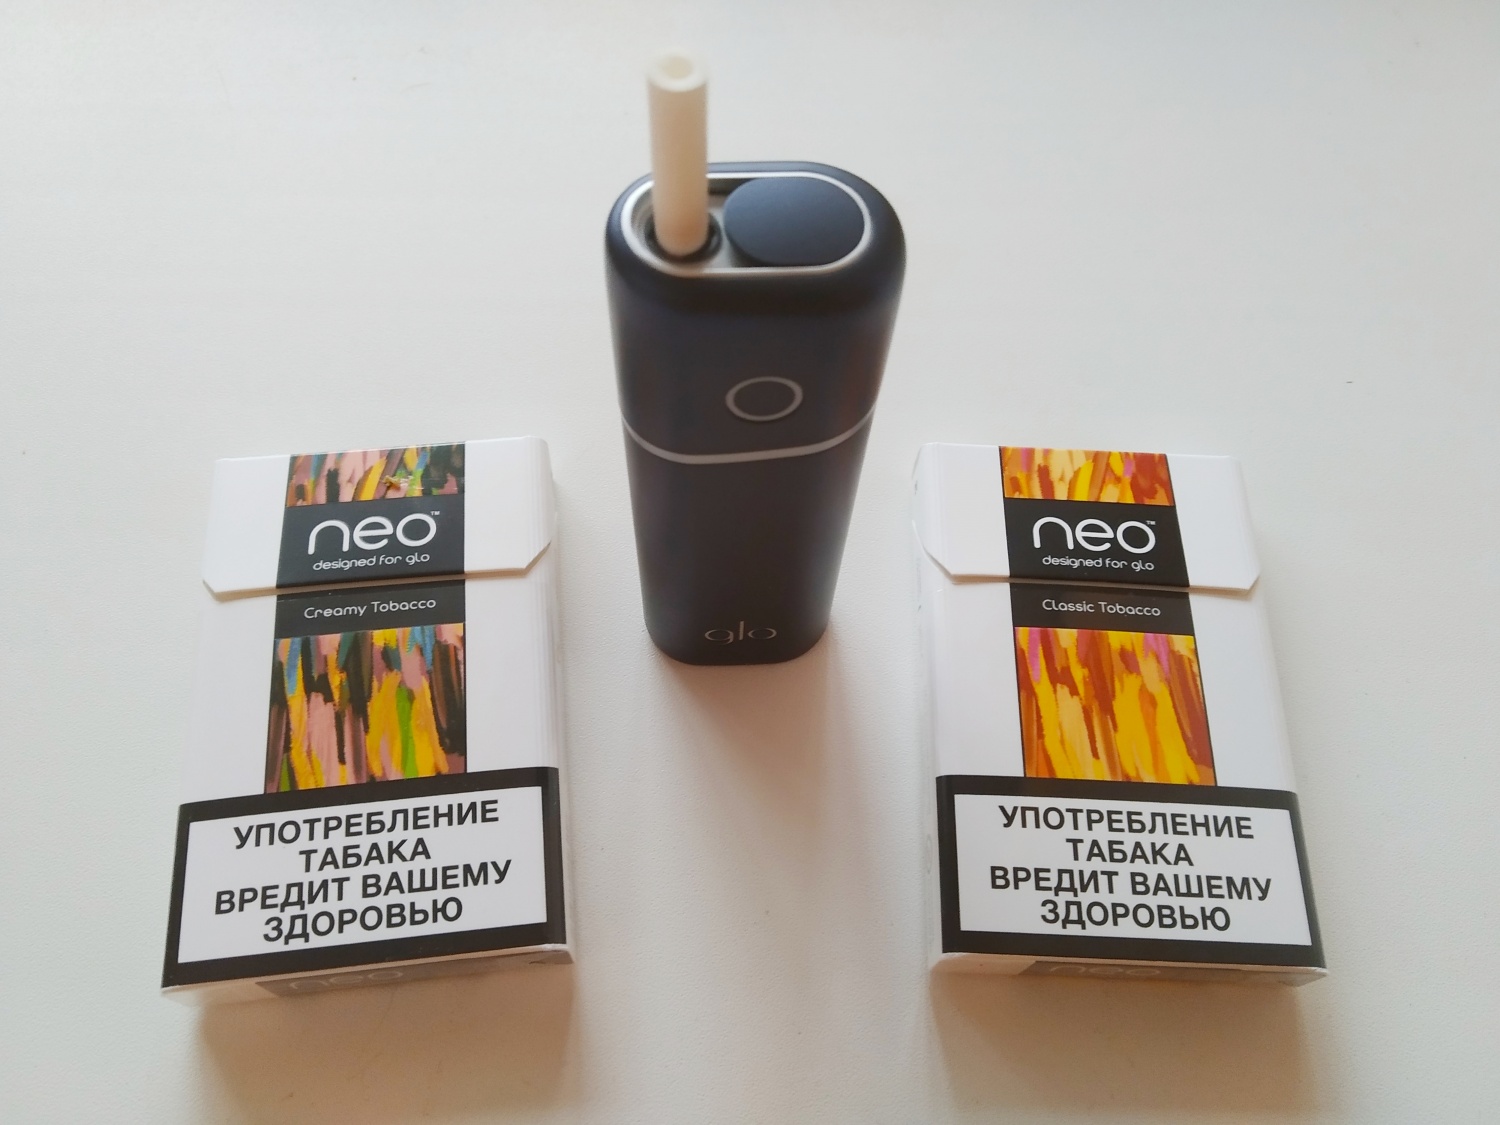 Neo нагреватель табака